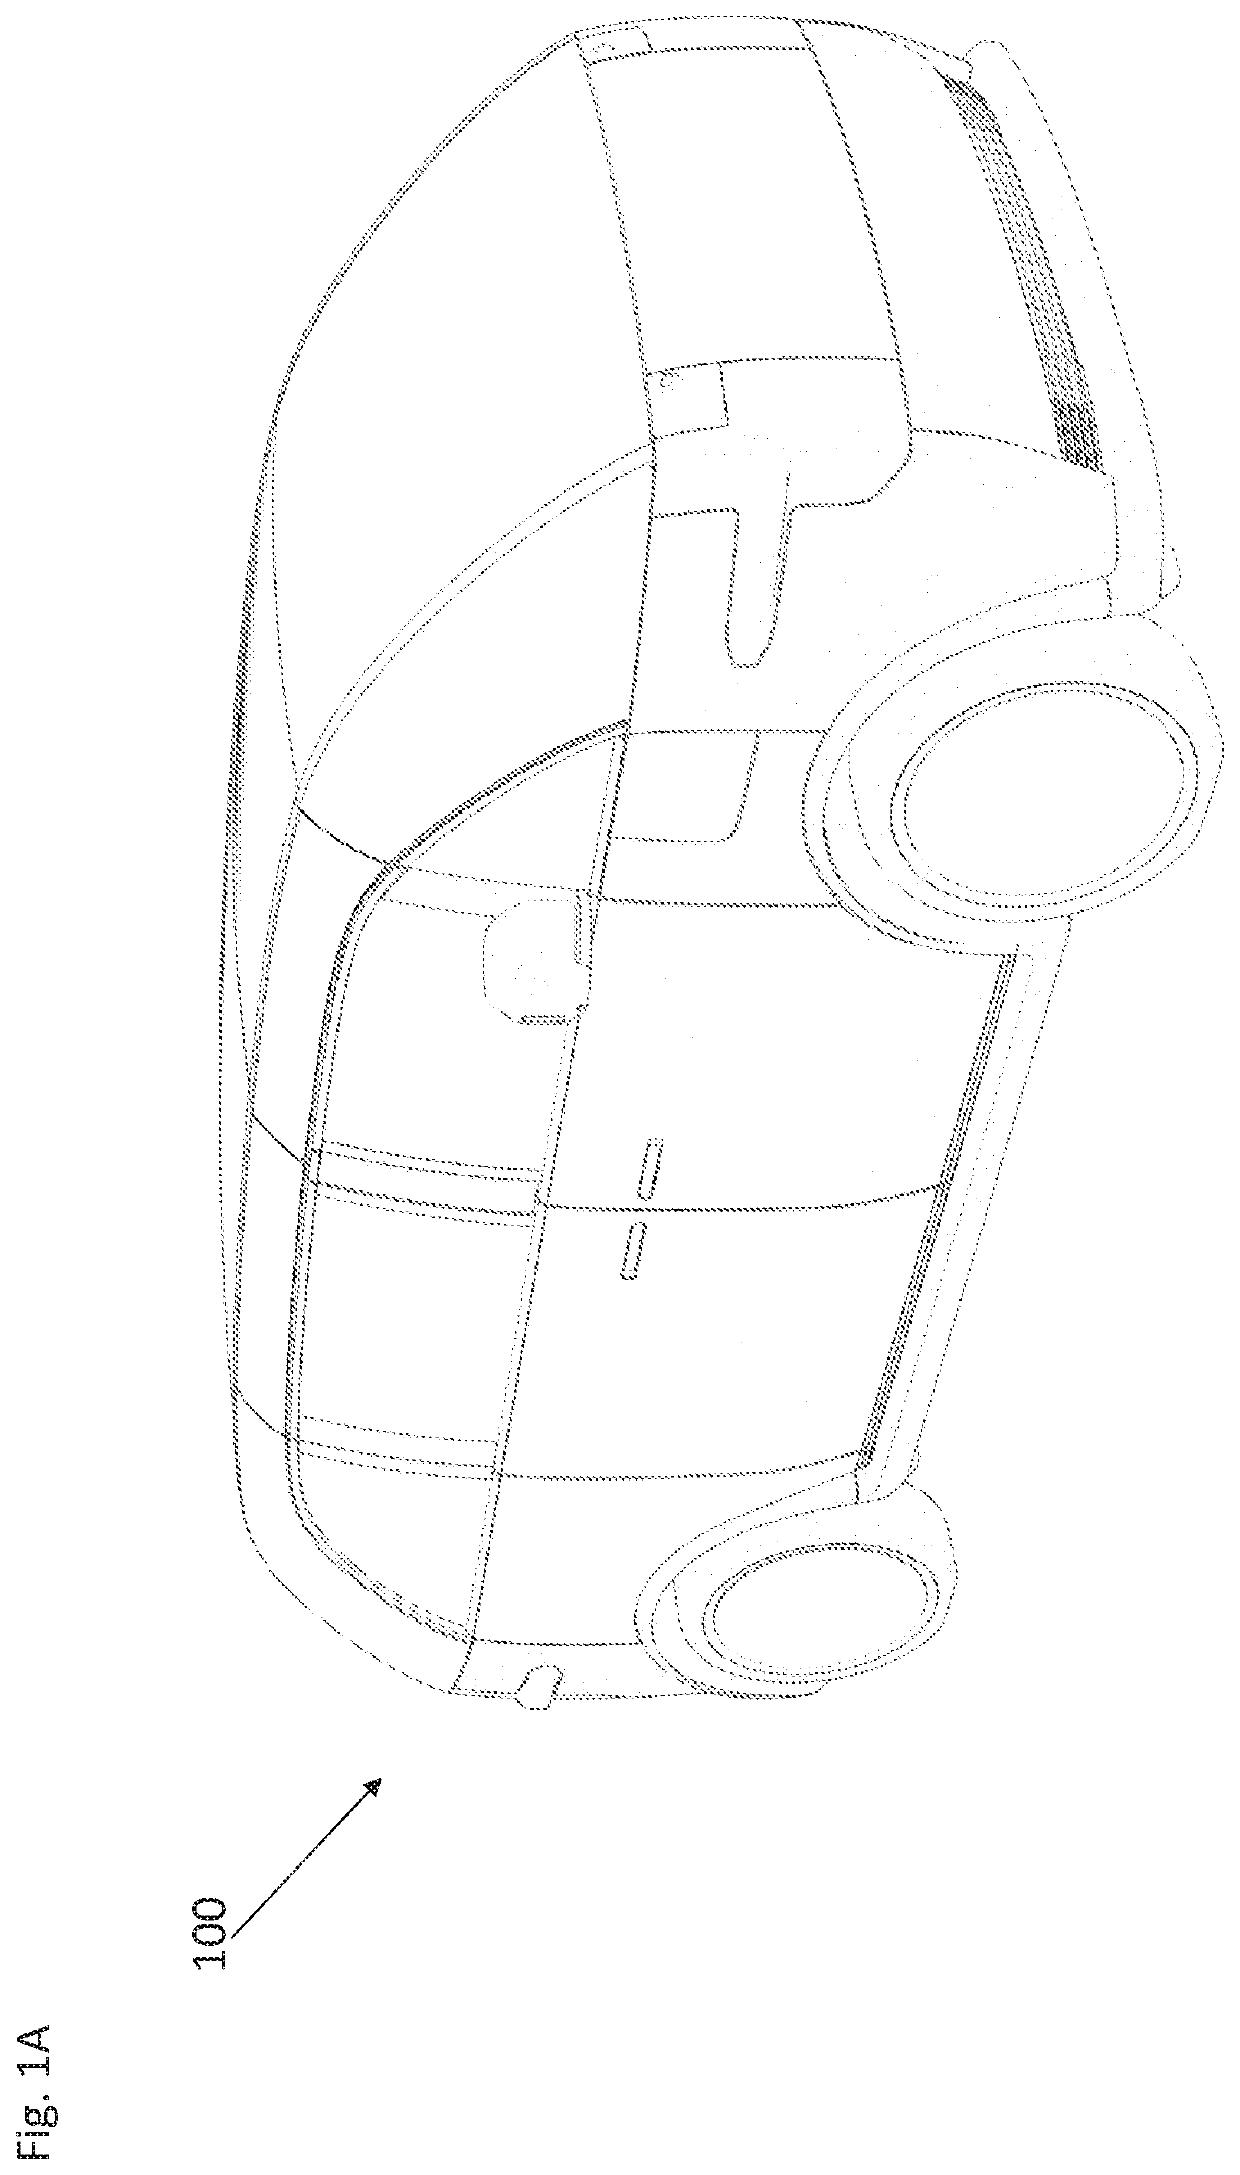 Vehicle external features